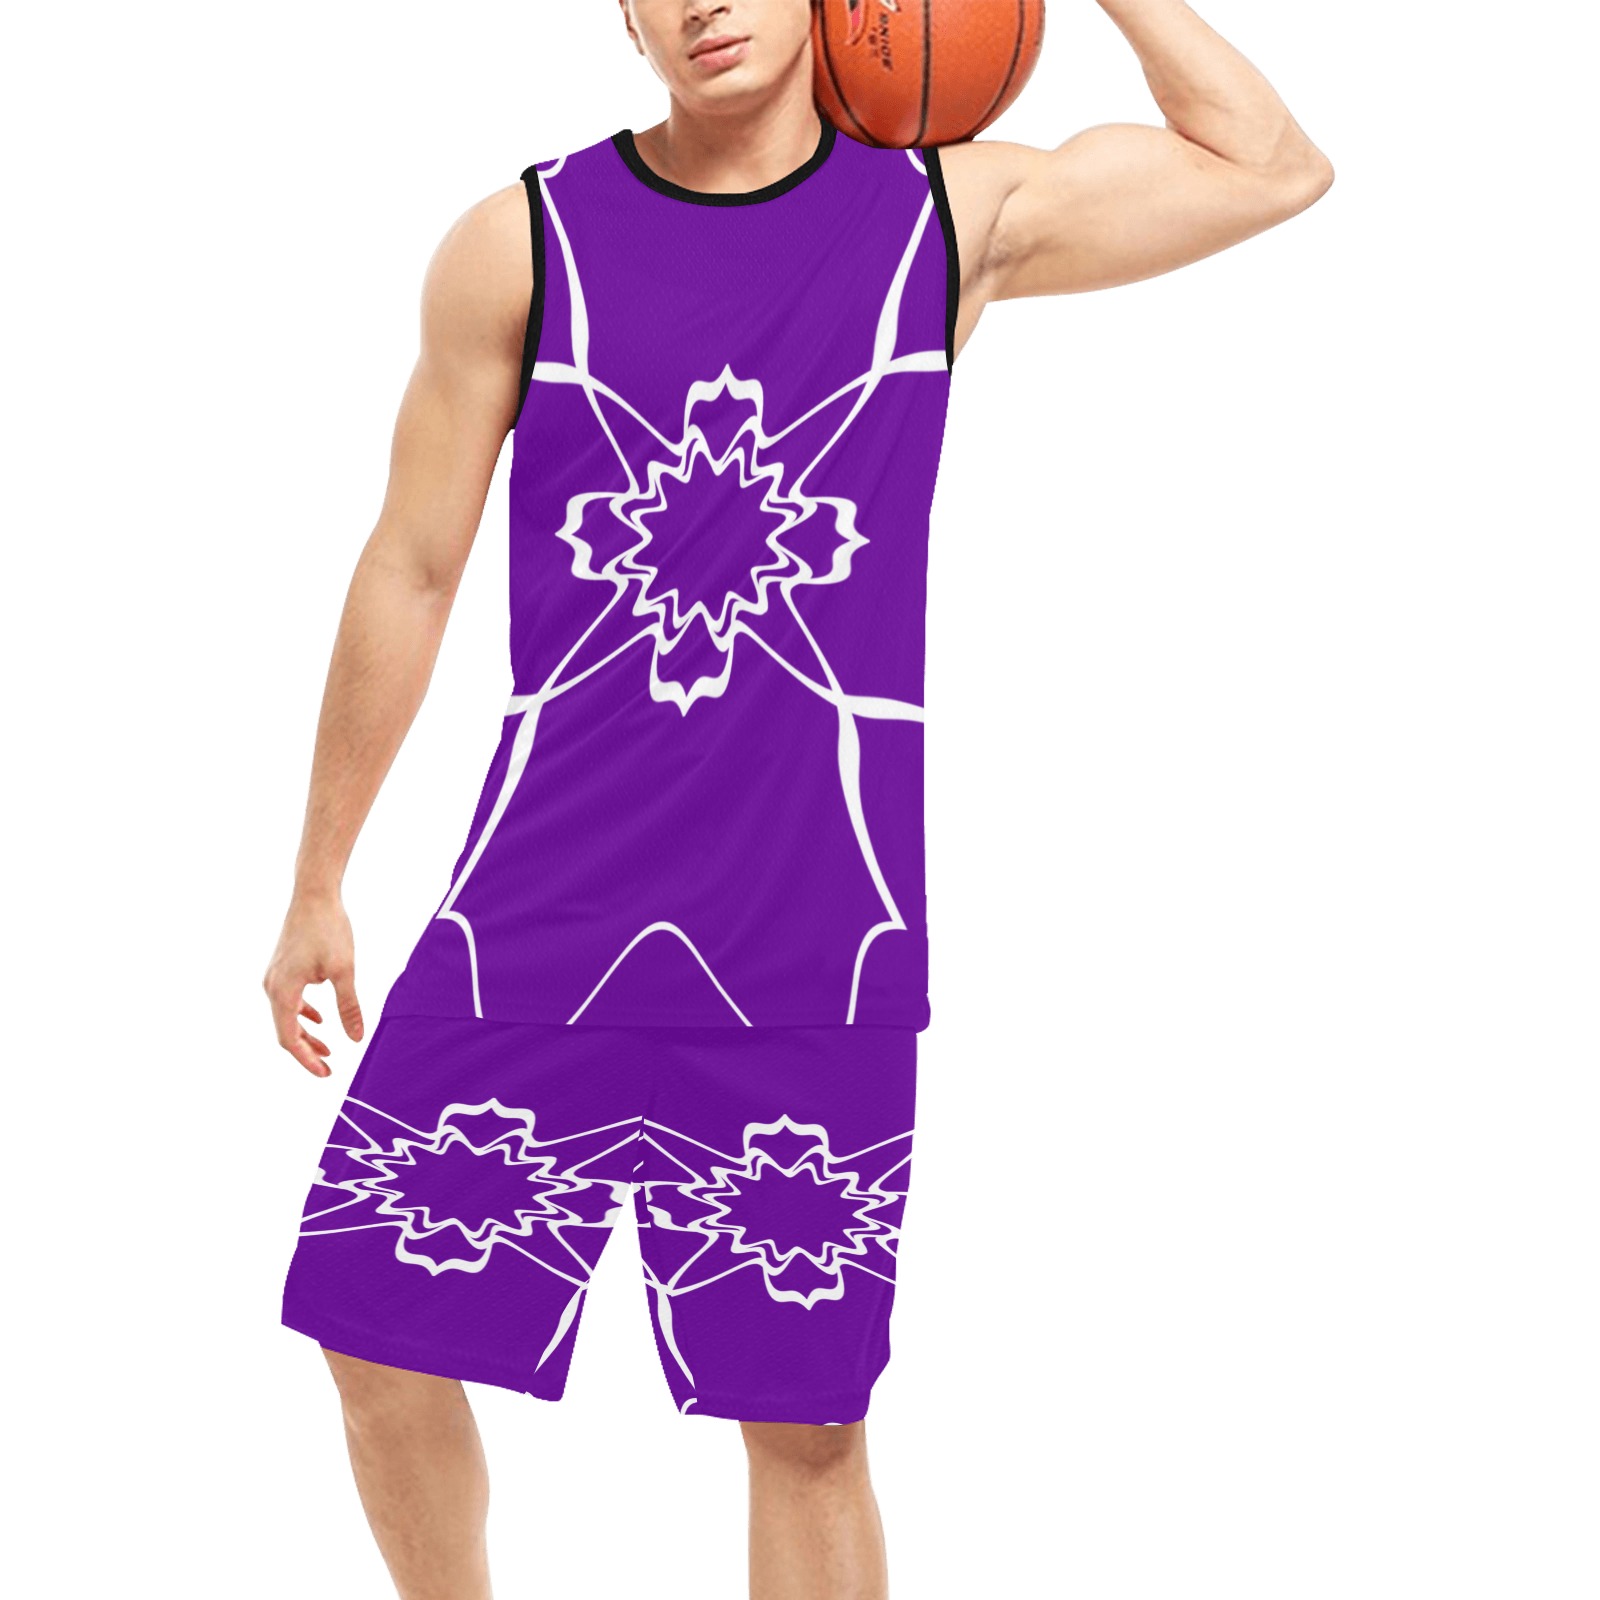 White Interlocking Triangles2 Starred purple Basketball Uniform with Pocket